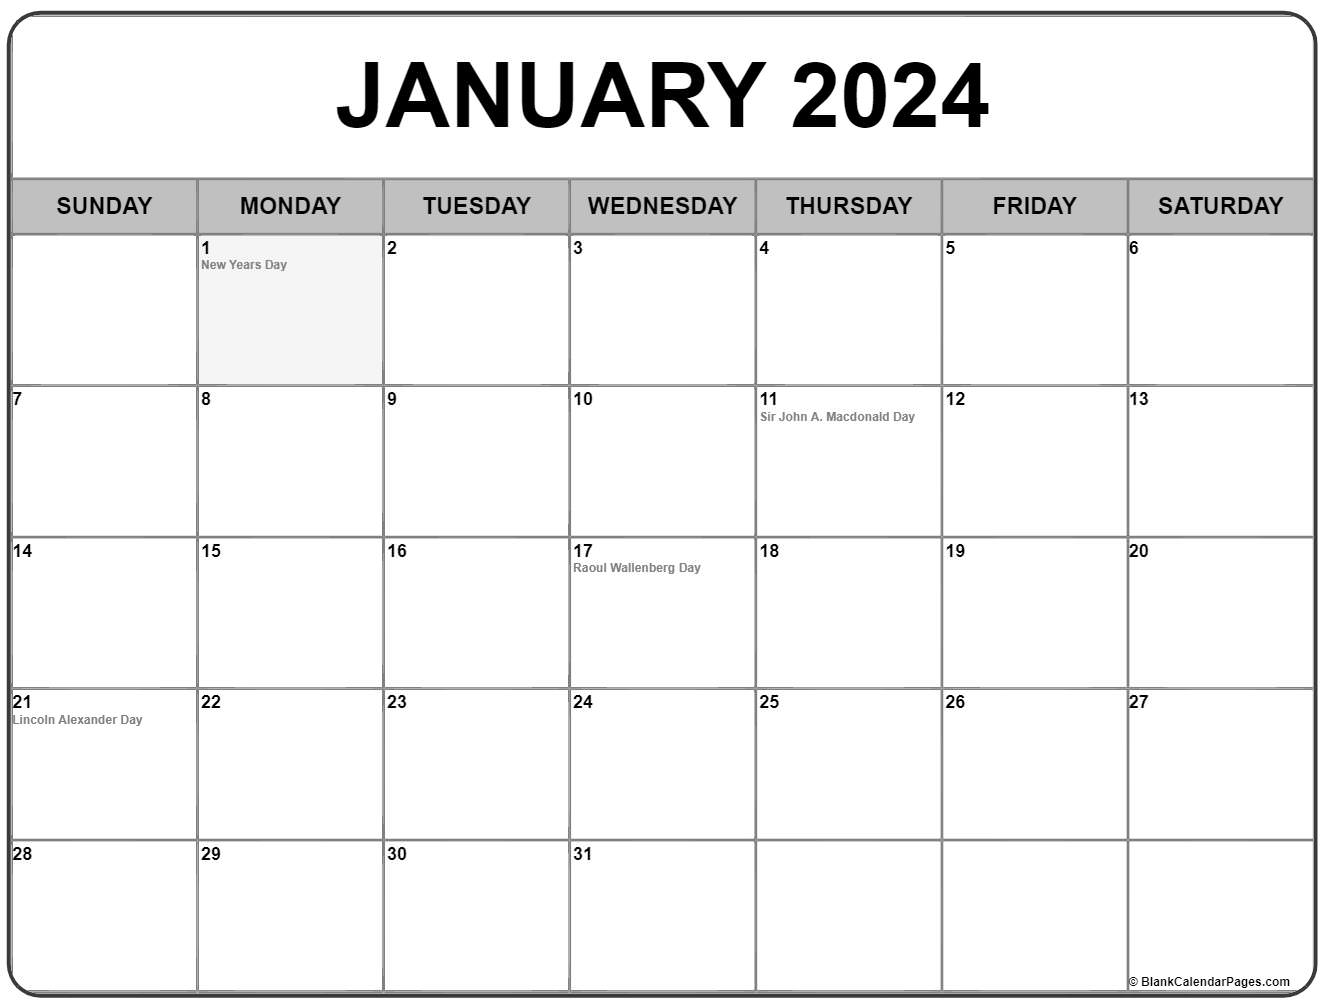 january-2024-with-holidays-calendar